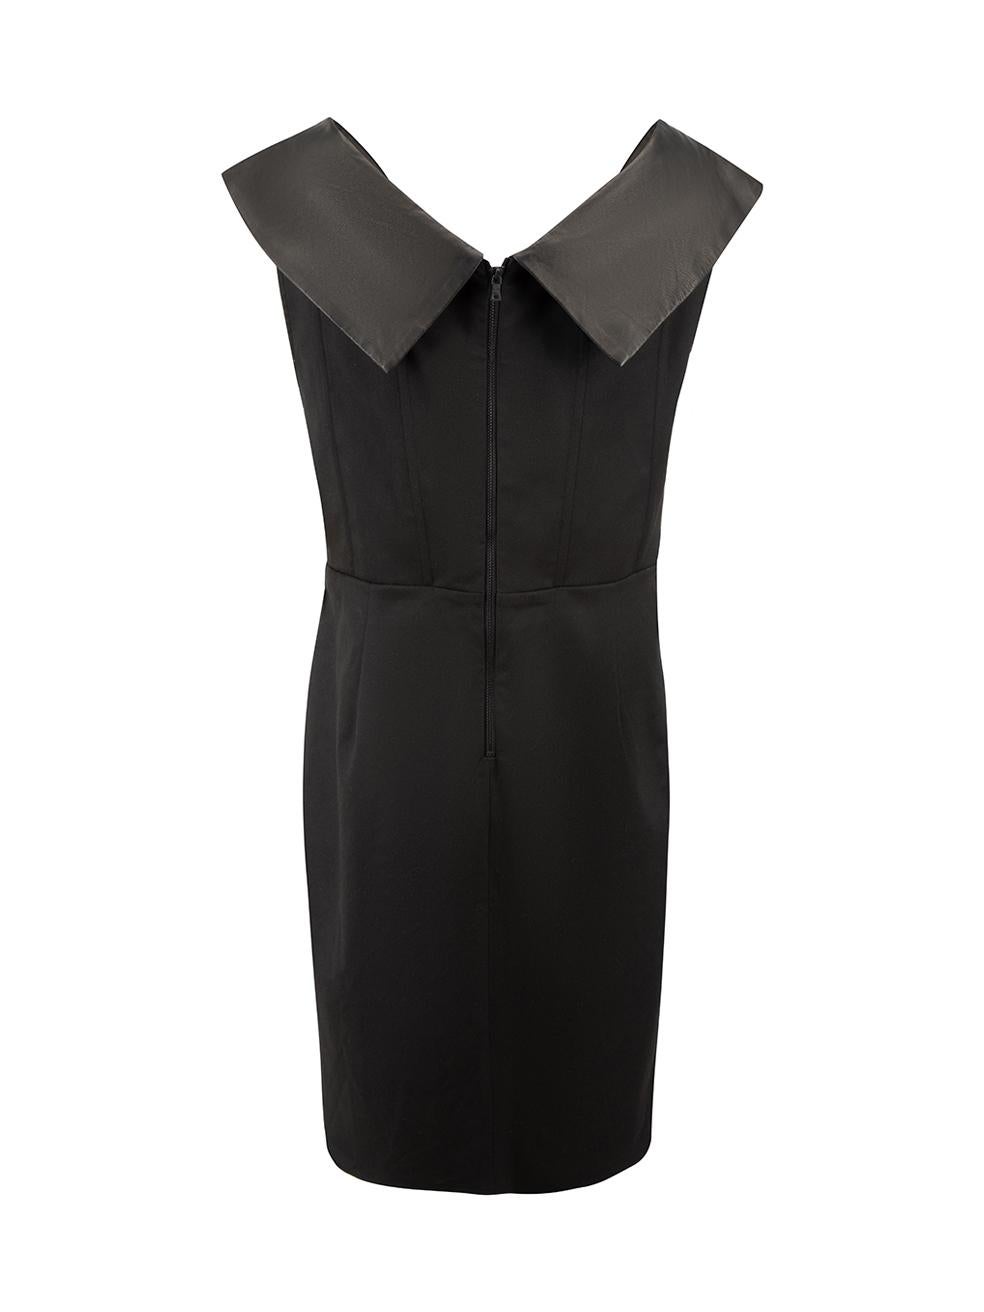 Alice + Olivia Black Collared Mini Dress Size XXL In New Condition For Sale In London, GB